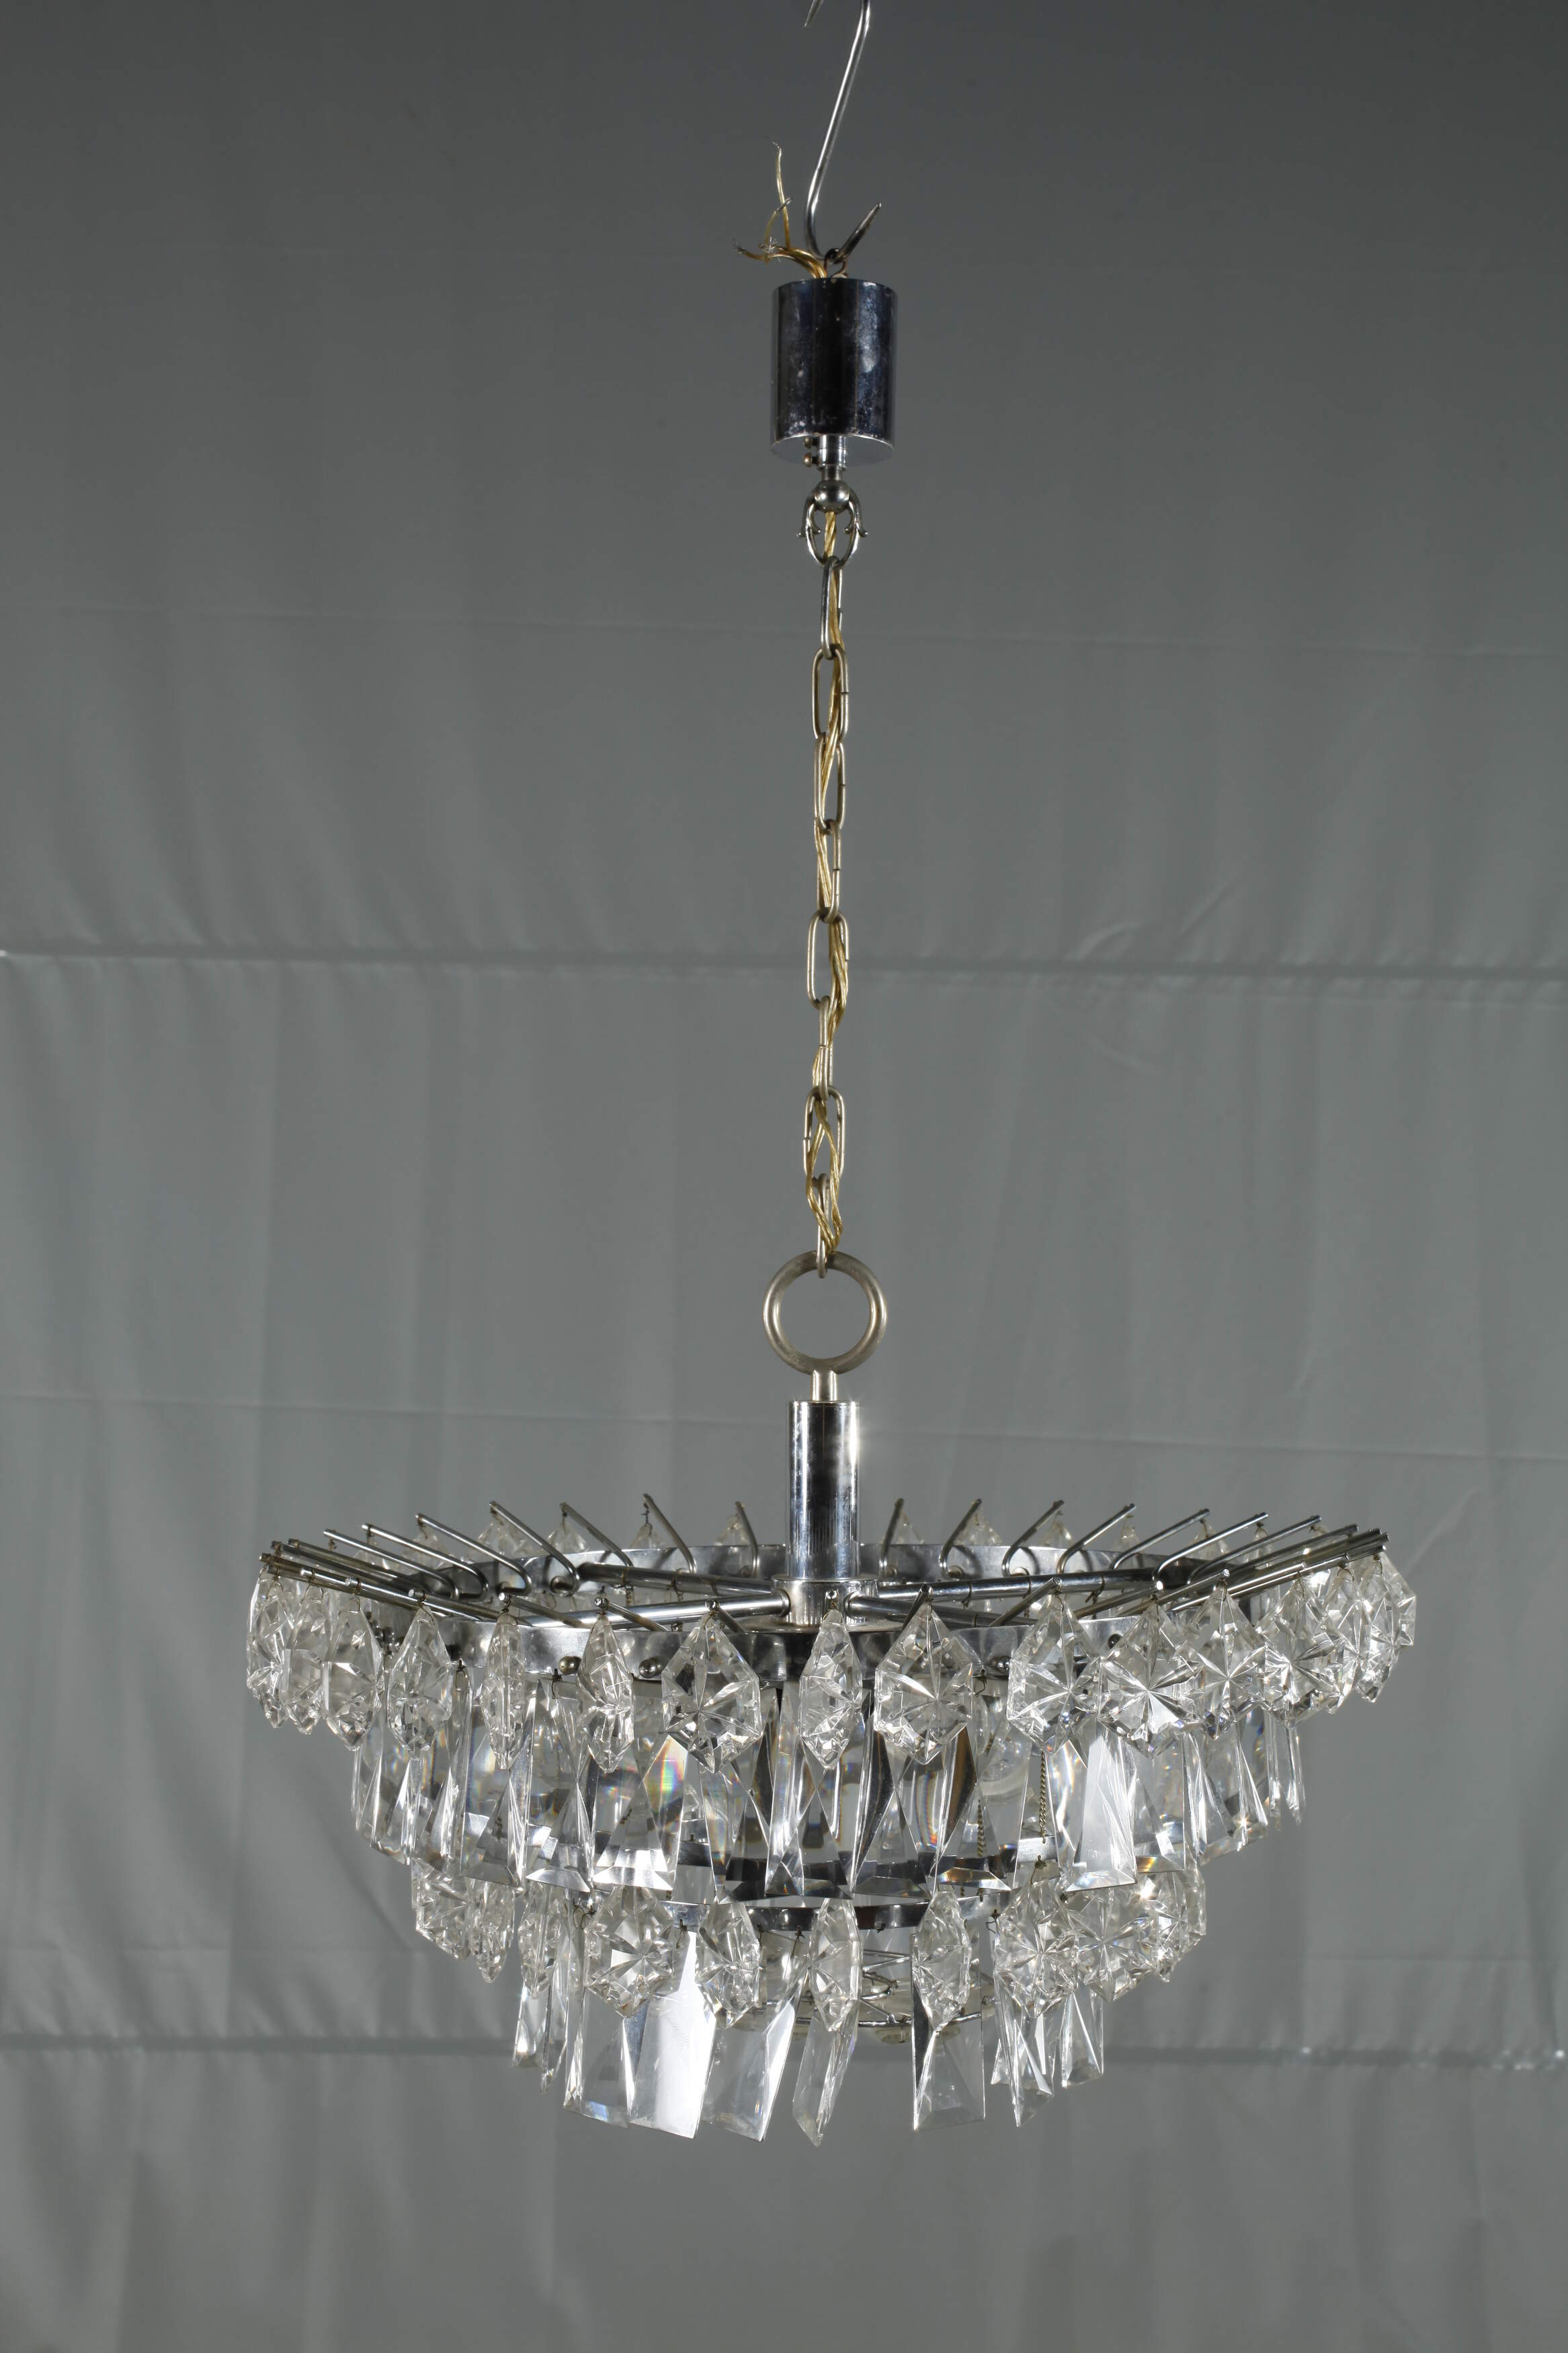 Ceiling lamp design - Image 2 of 6